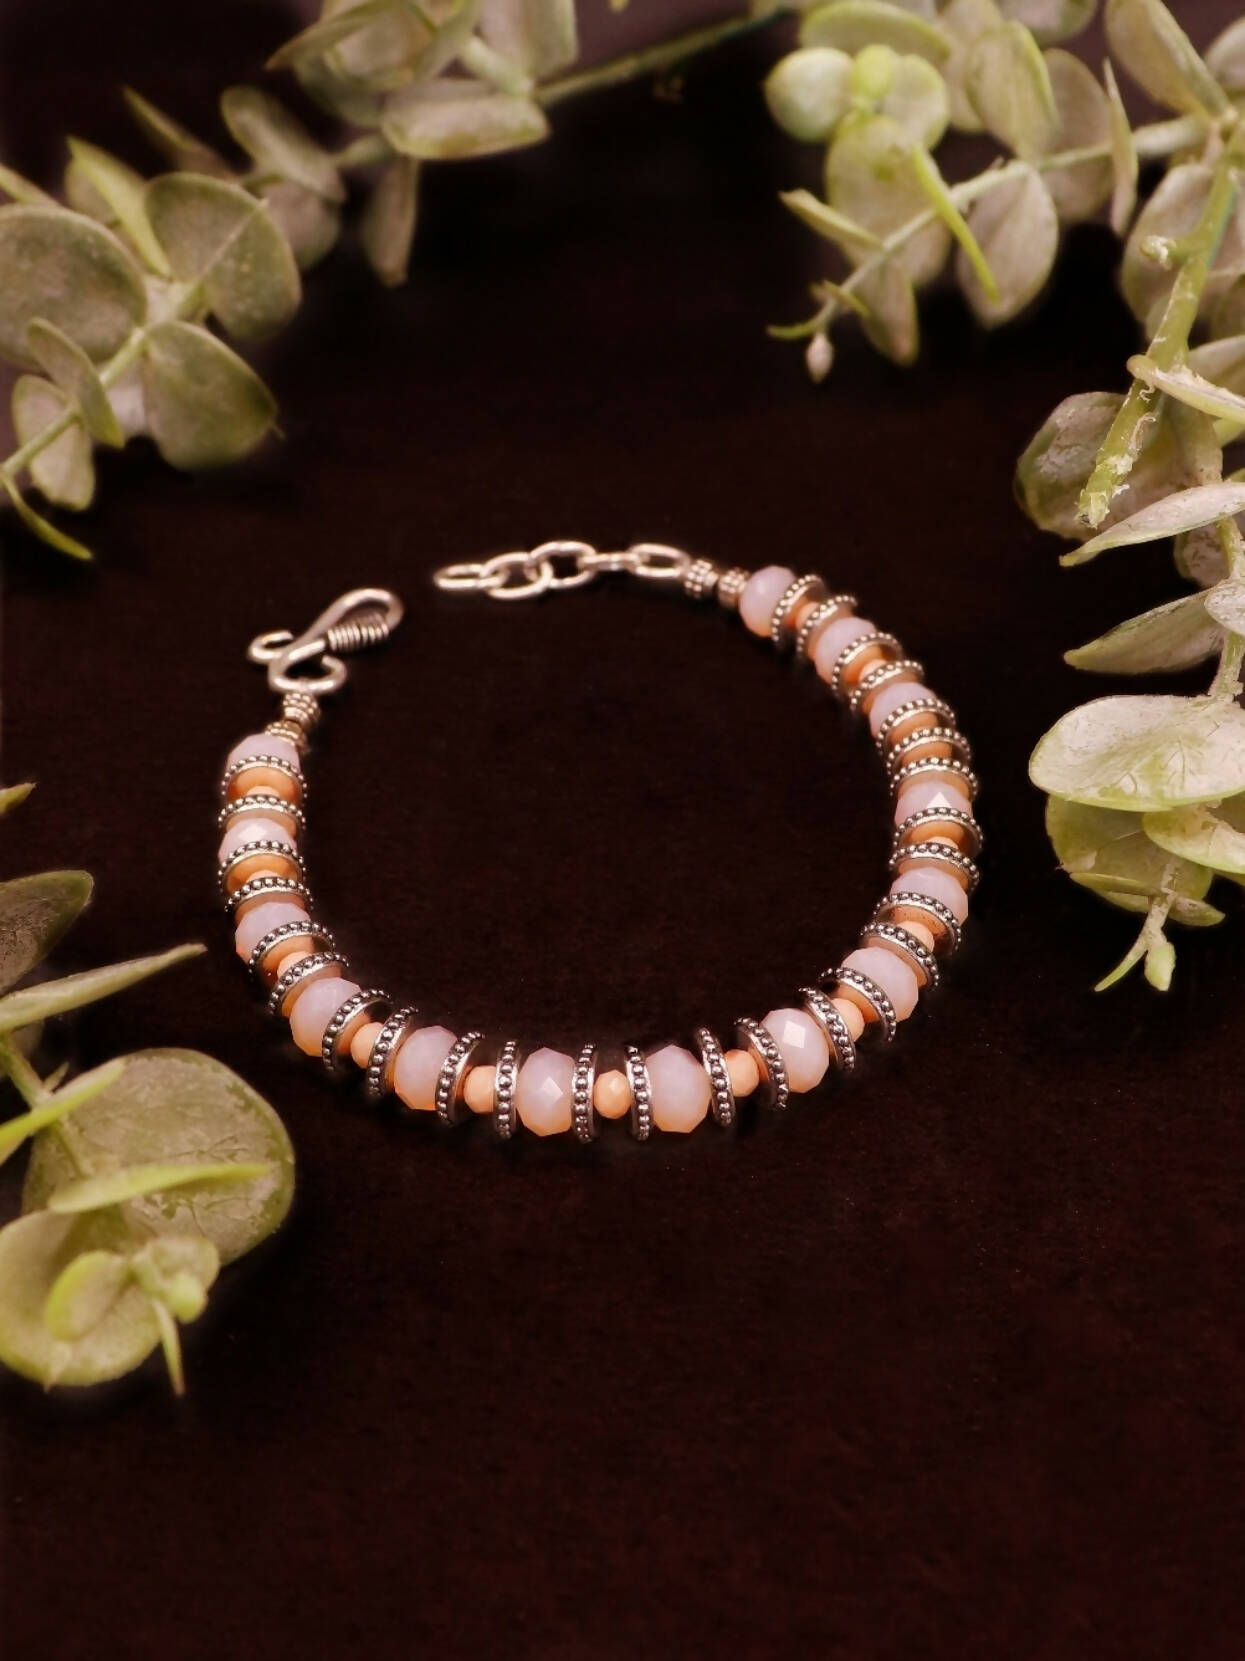 Handmade German silver oxidized silver look alike Office wear Bracelet with Light Pink and Peach Crystal Cut Beads - PRIYANKA